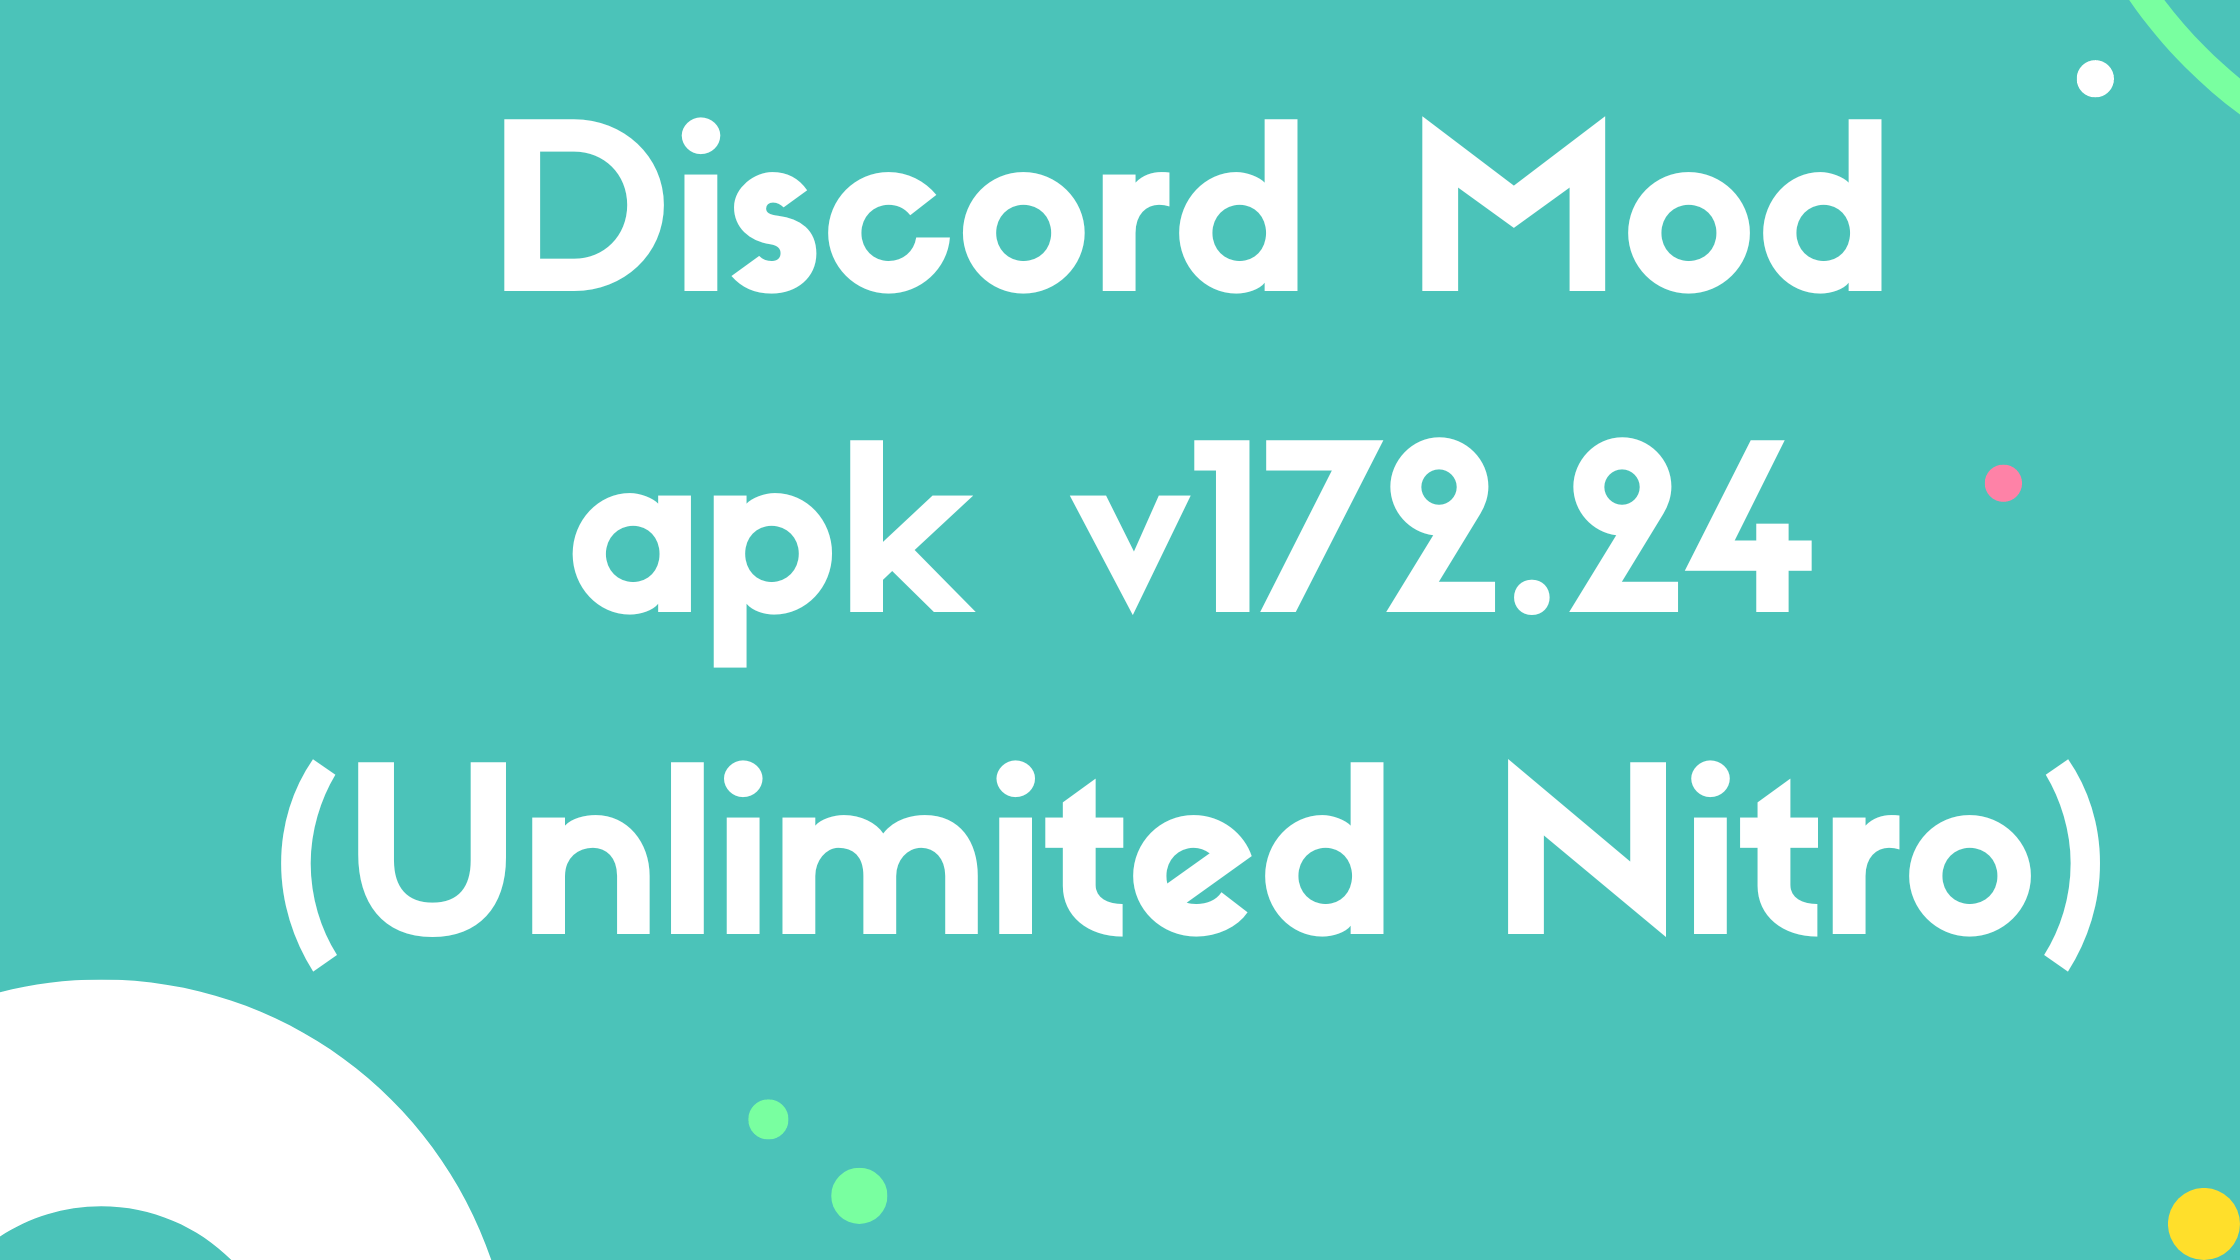 Discord Mod apk v172.24 (Unlimited Nitro)